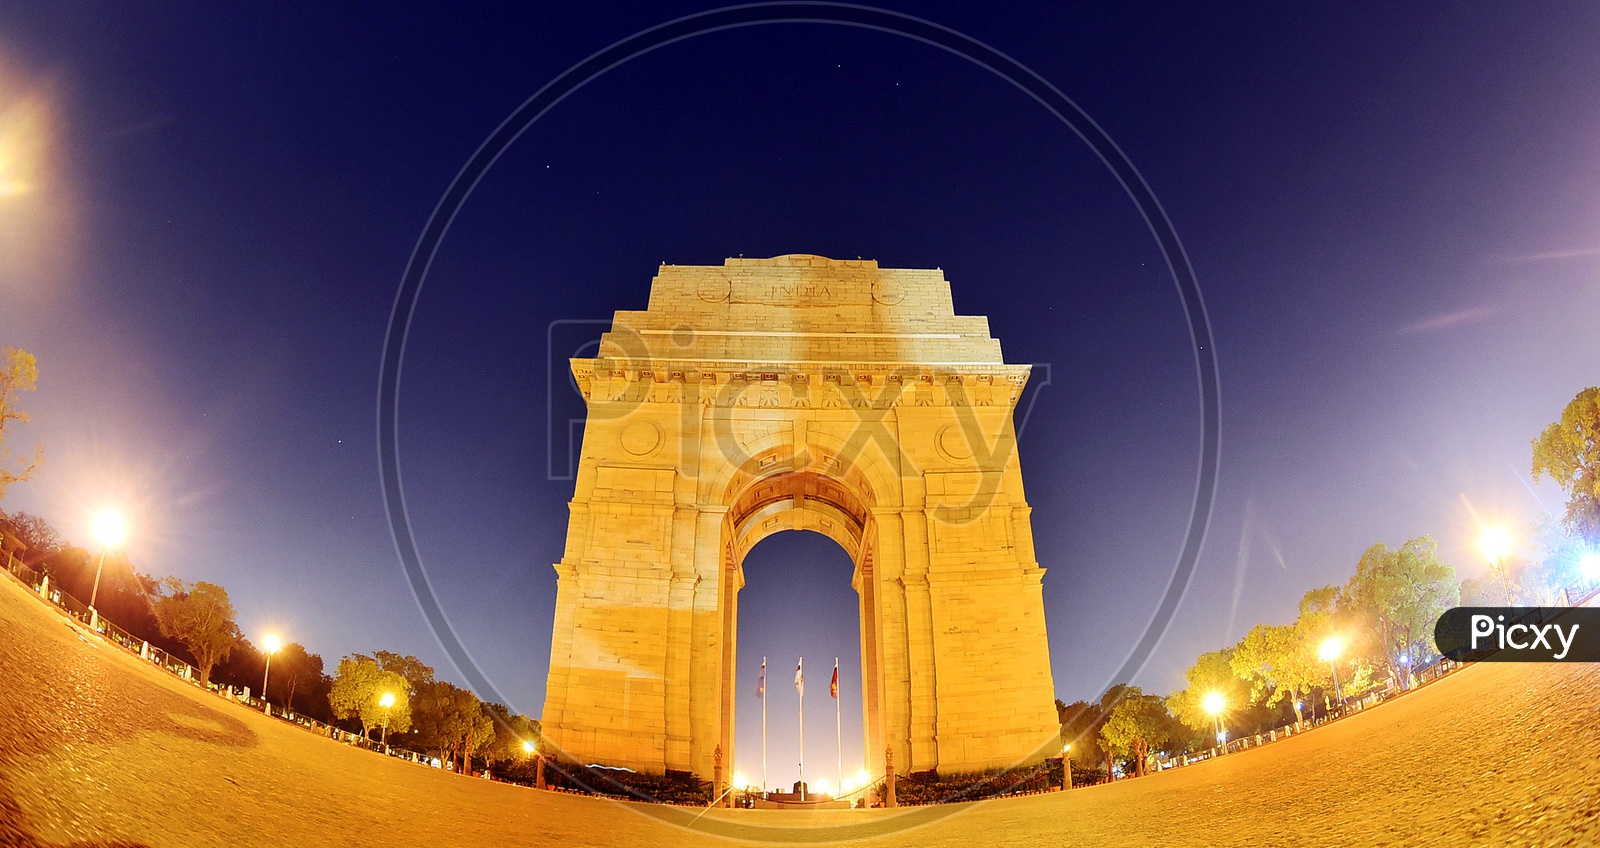 India Gate under the stars at night - Fish Eye View